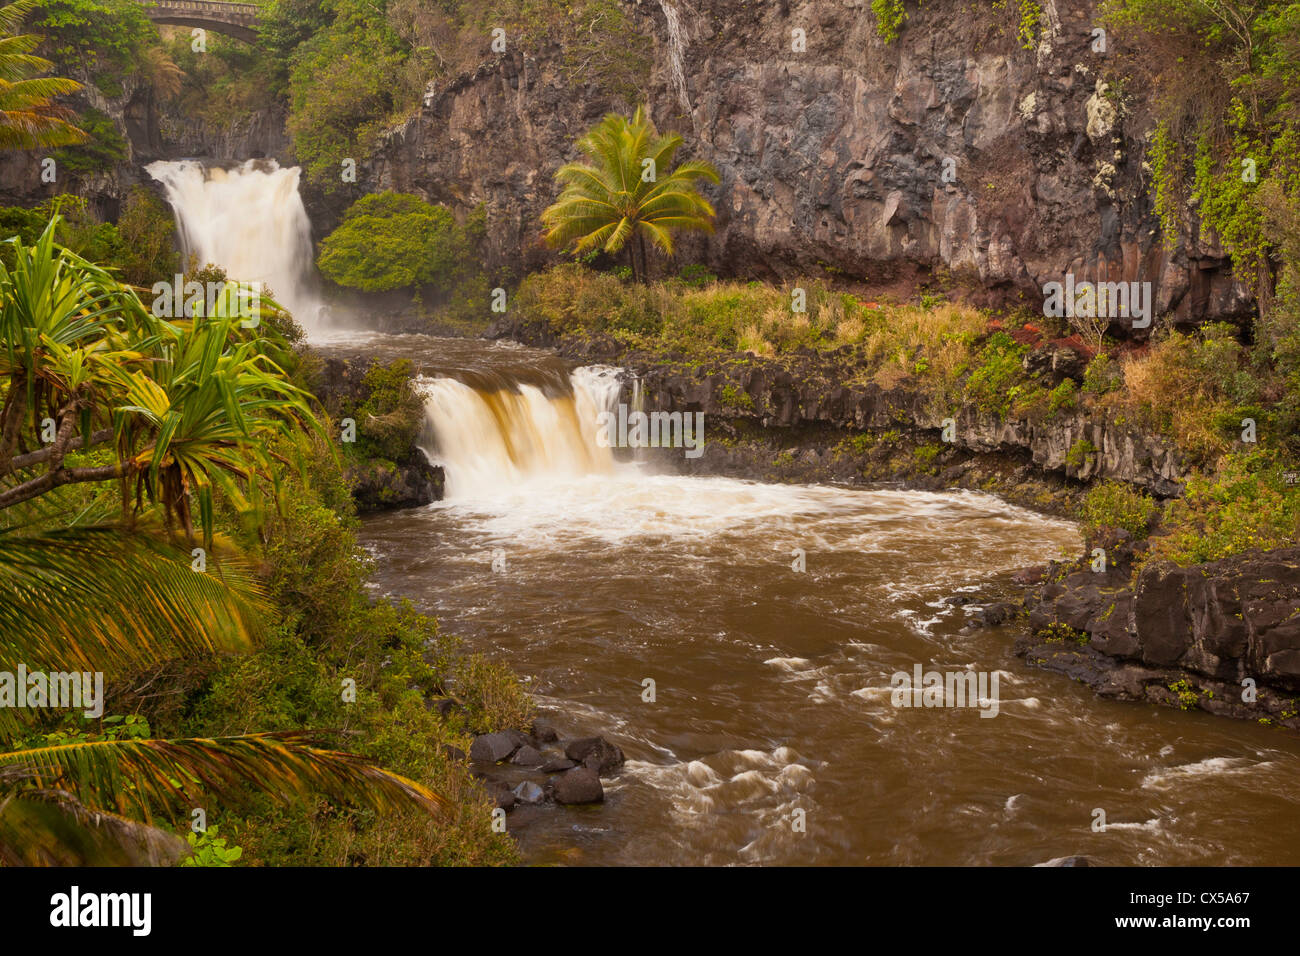 Stati Uniti d'America, Hawaii Maui, Haleakala National Park. "Ohe"o Gulch e sette piscine sacra. Foto Stock